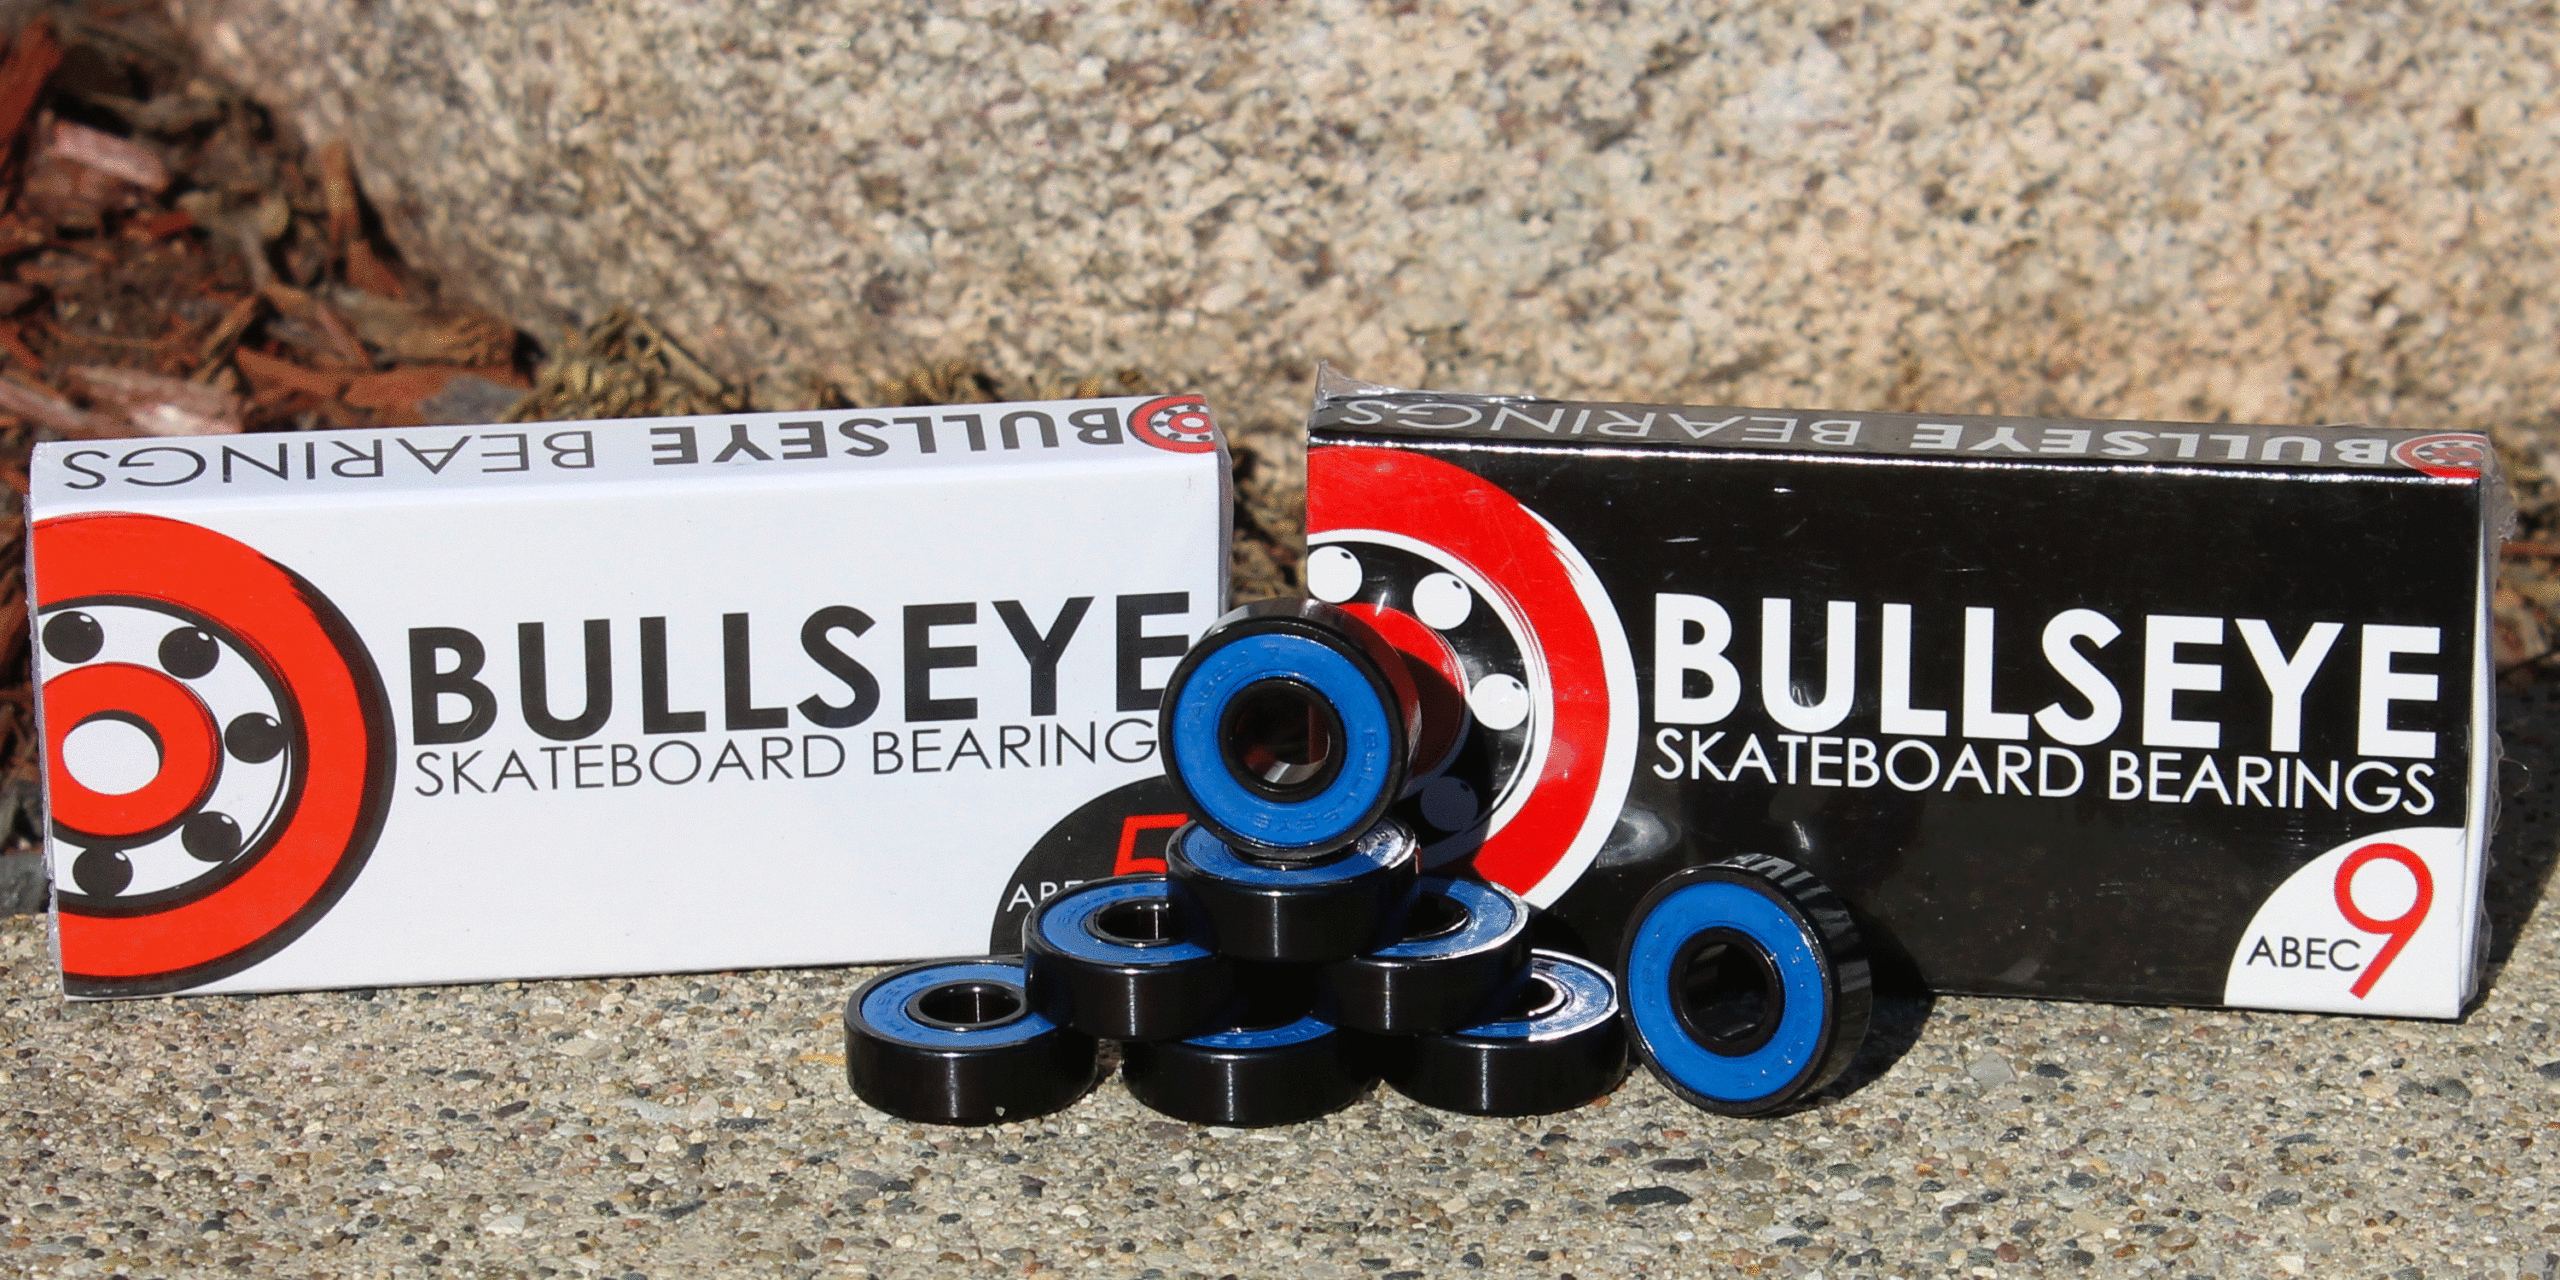 About Bullseye Skateboard Bearings